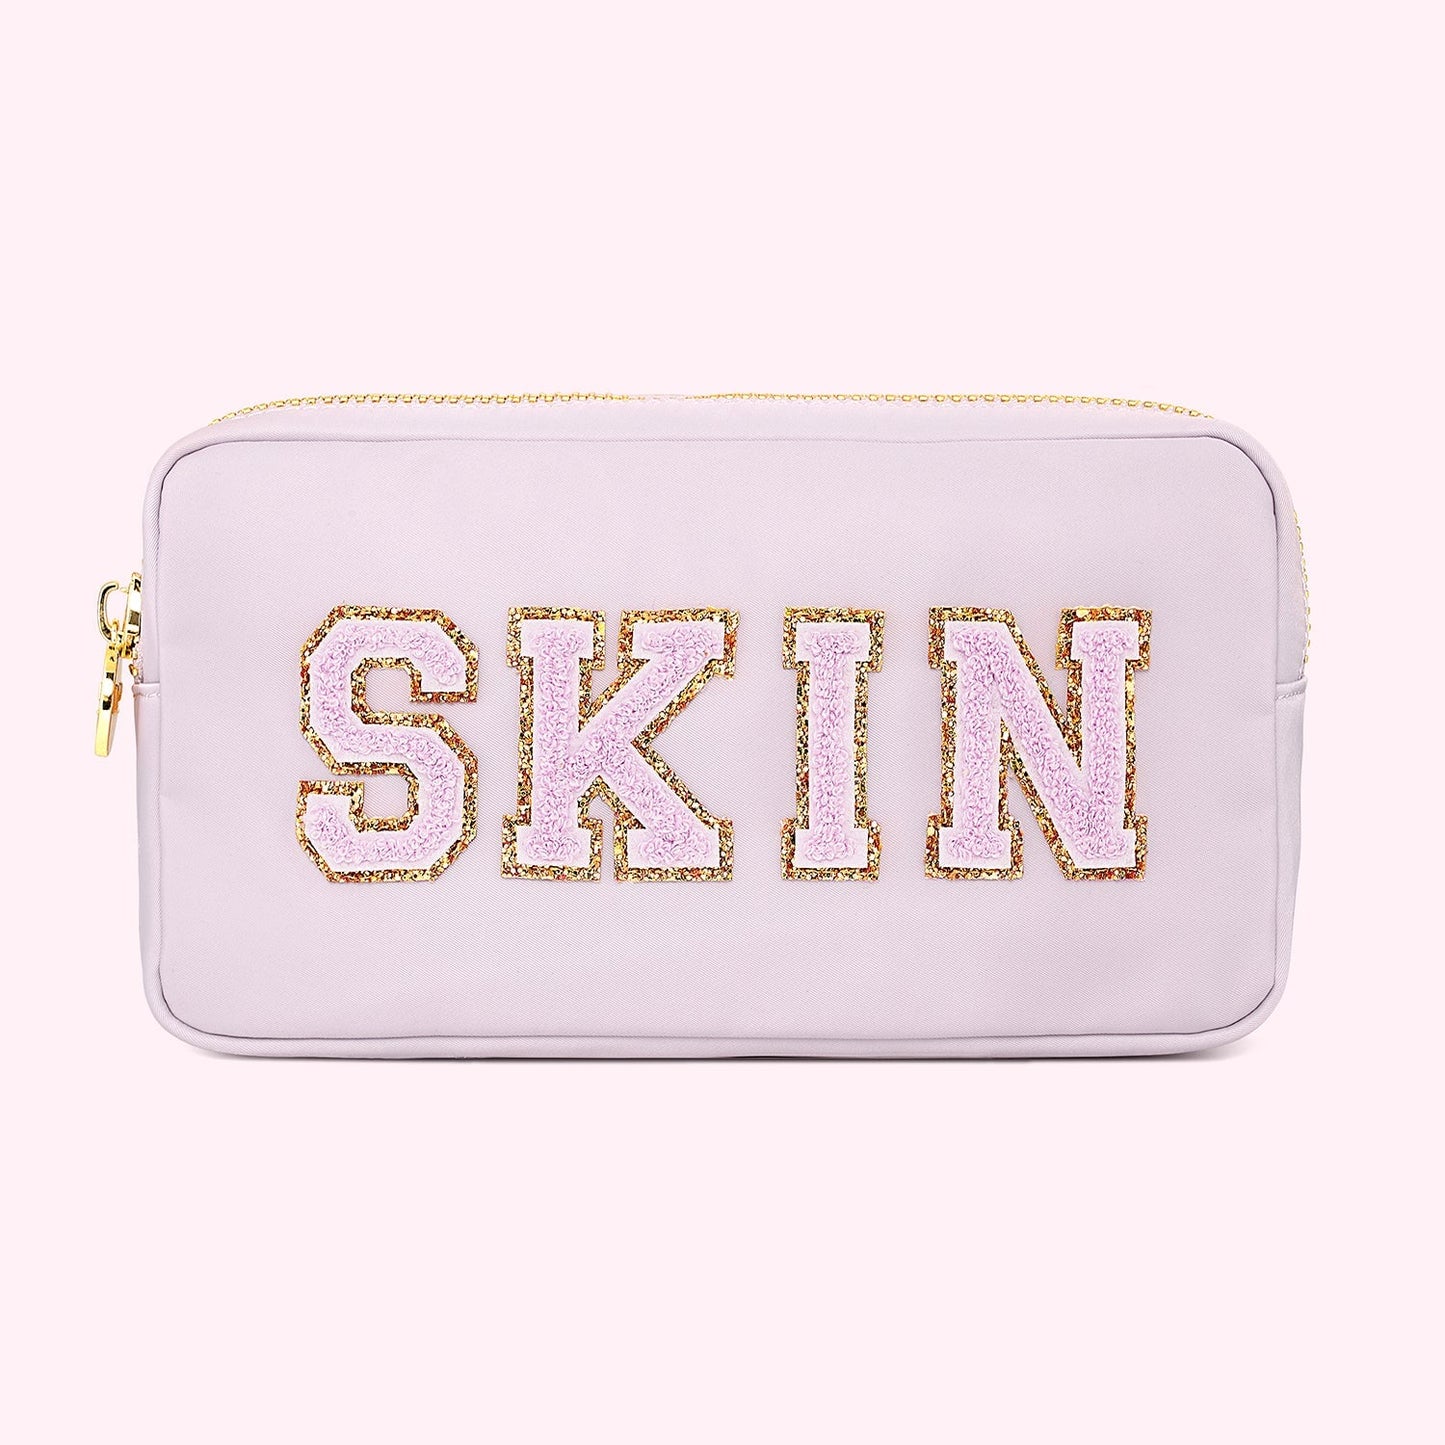 shortyLOVE Stevie - Small Cosmetic Bag